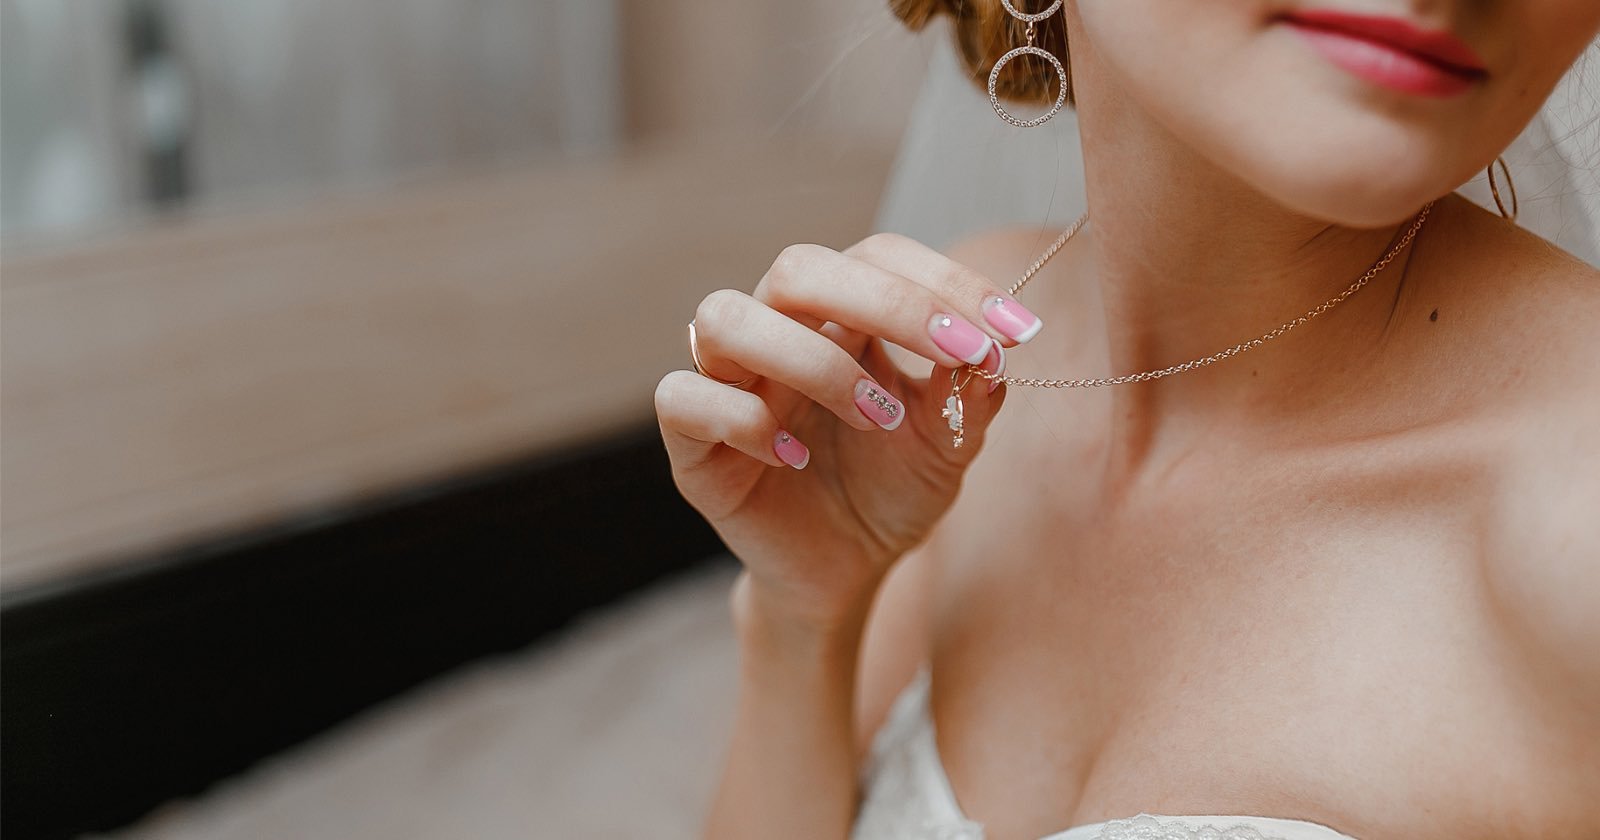  wedding photographer reveals hack bride necklace stays put 